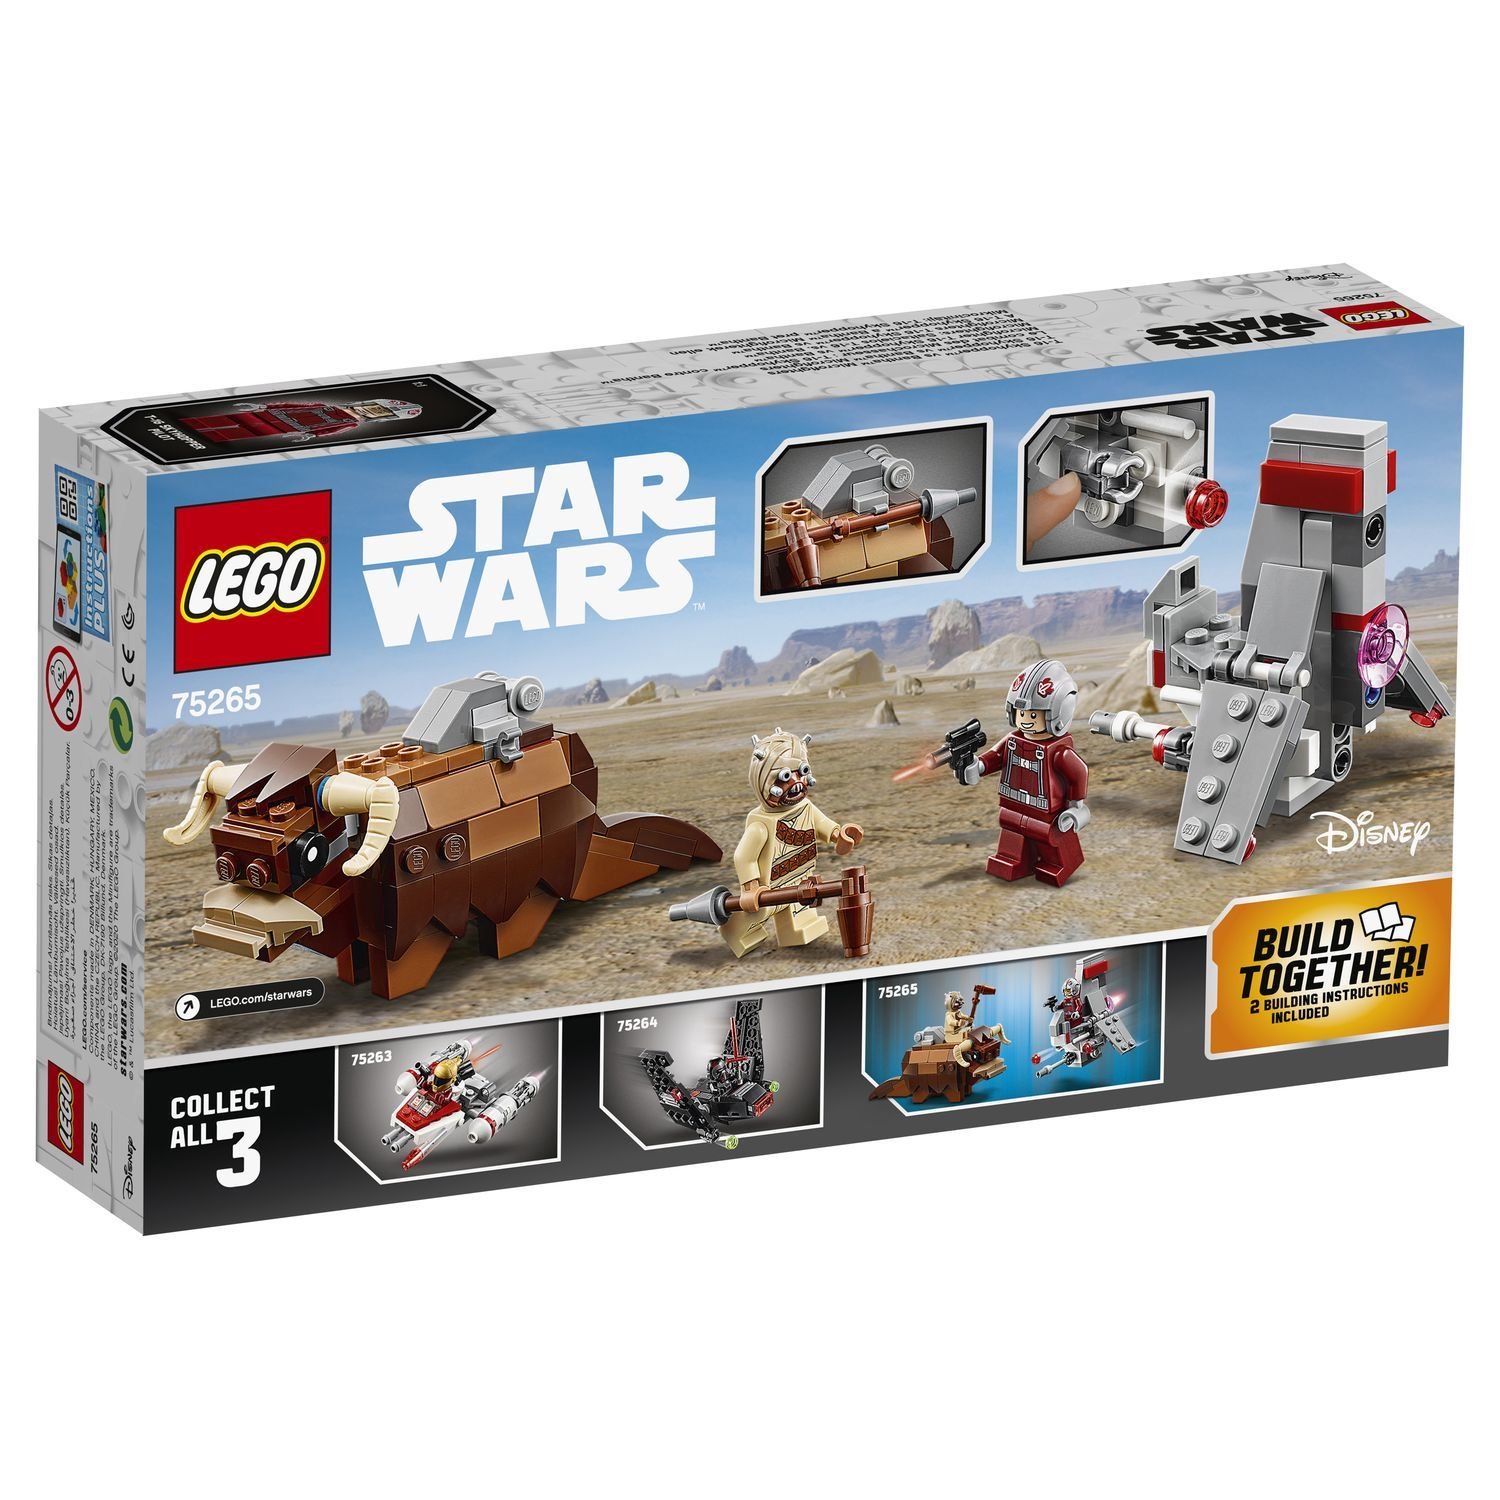 Lego Star Wars 75265 Микрофайтеры: Скайхоппер T-16 против Банты